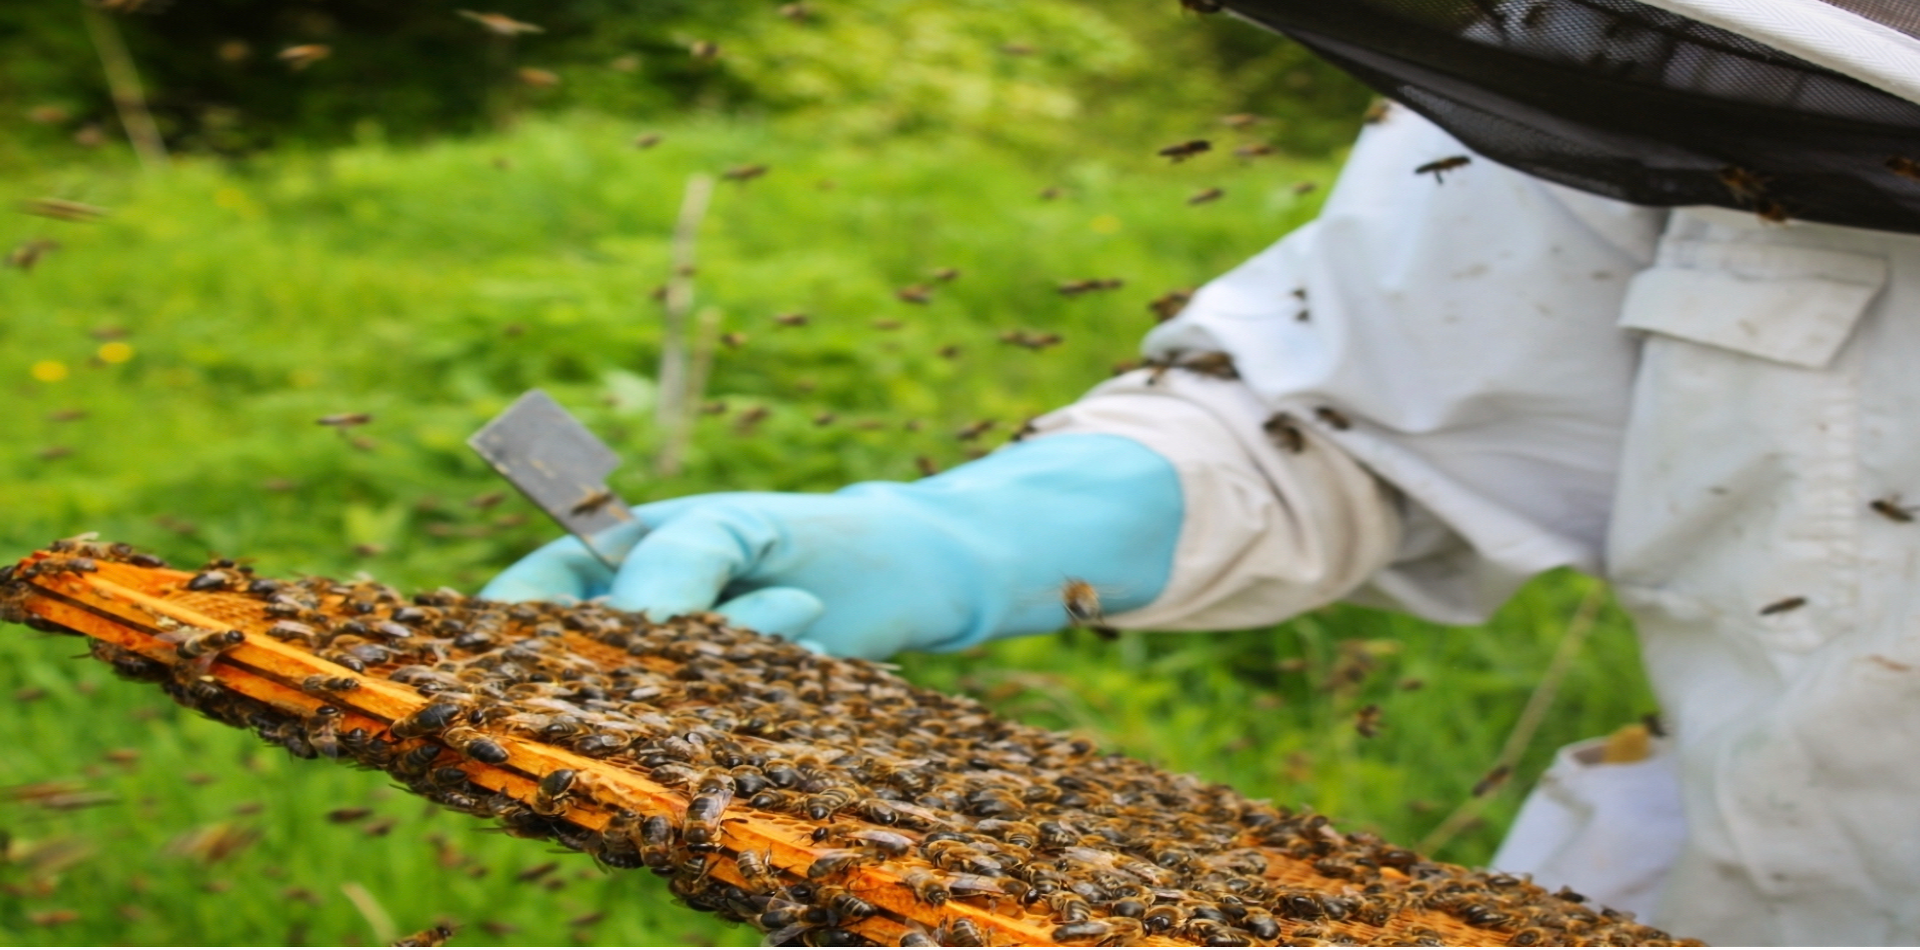 The-British-Bee-Company-header-image-of-beekeeper